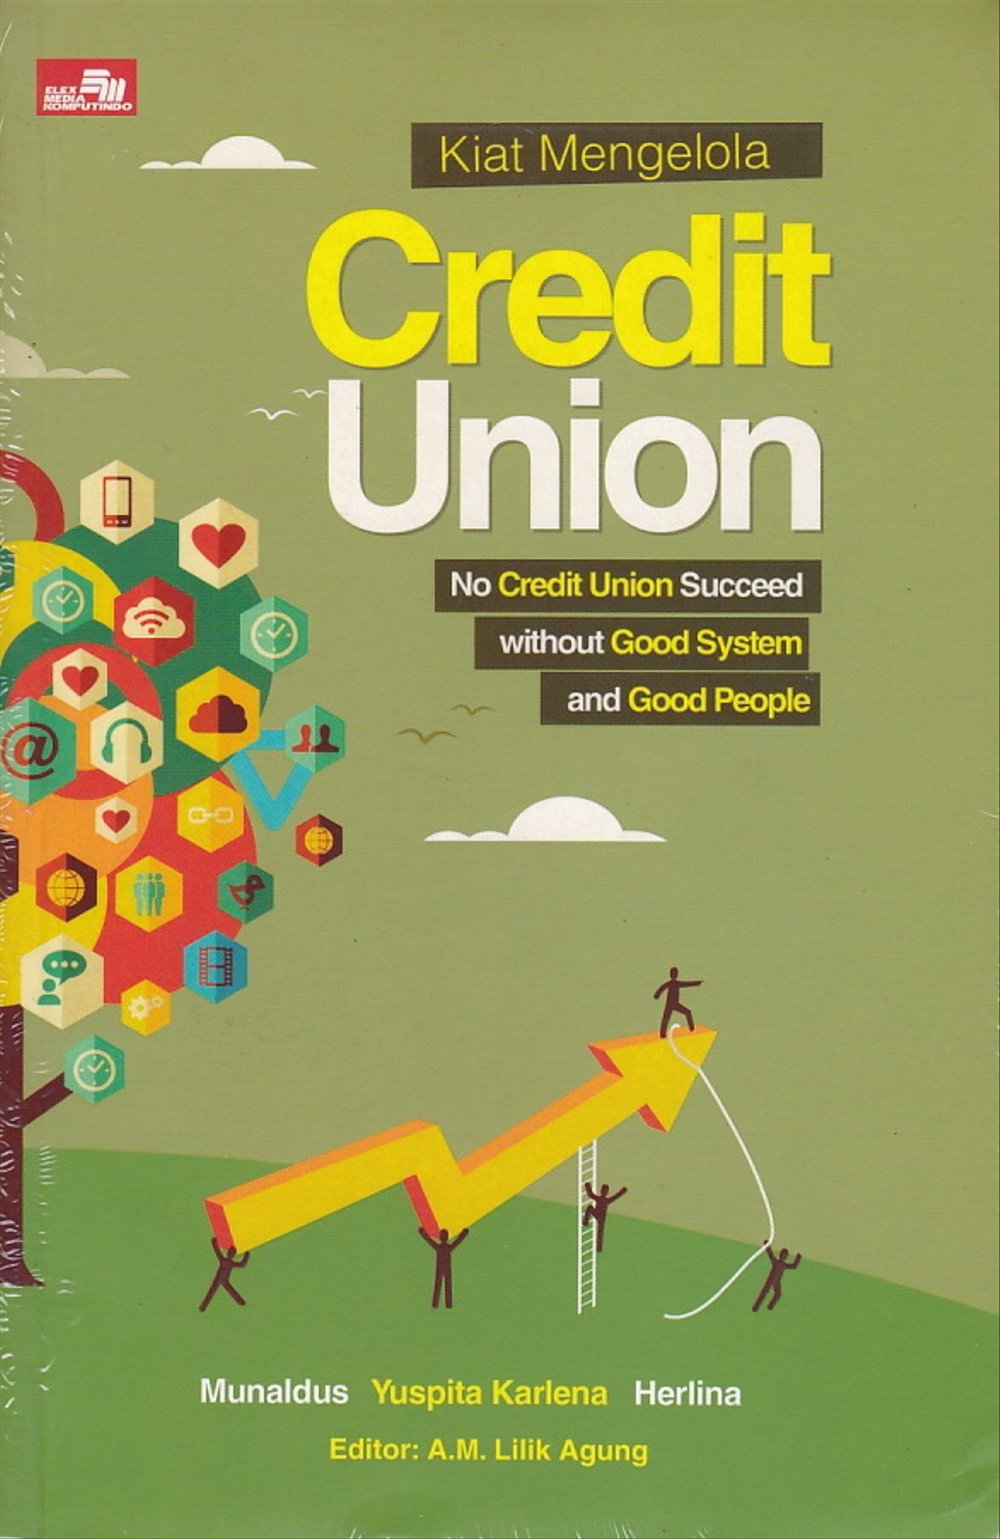 Kiat mengelola credit union